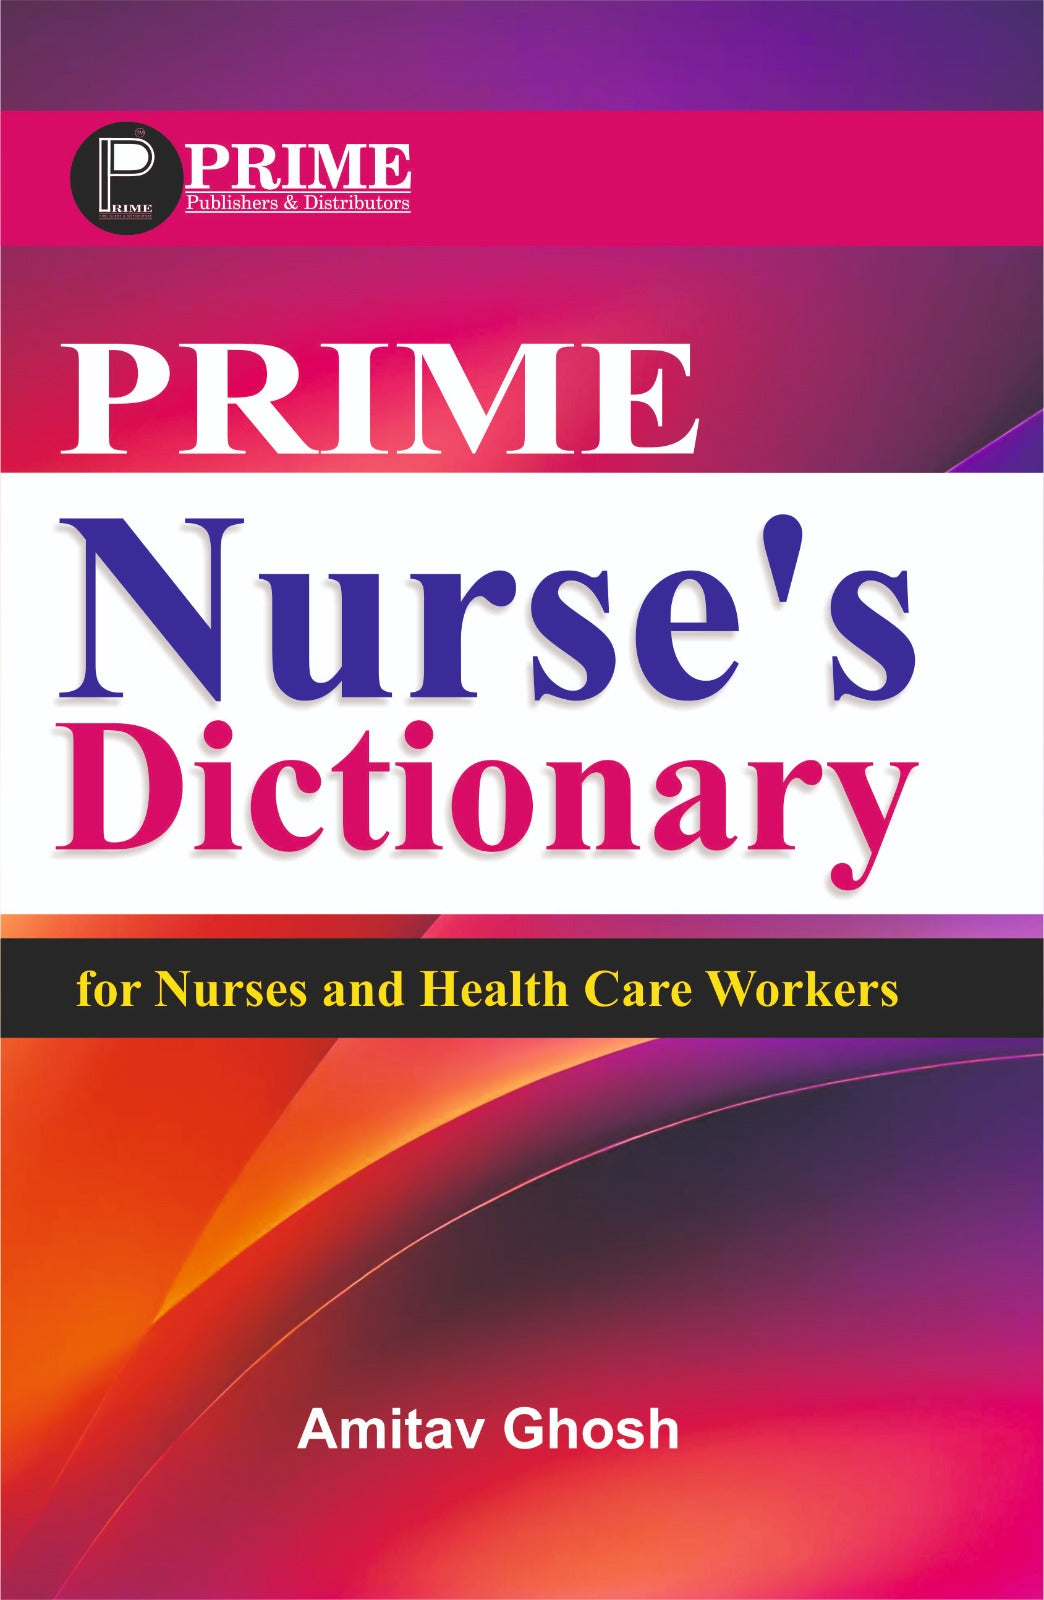 Nurses Dictionary